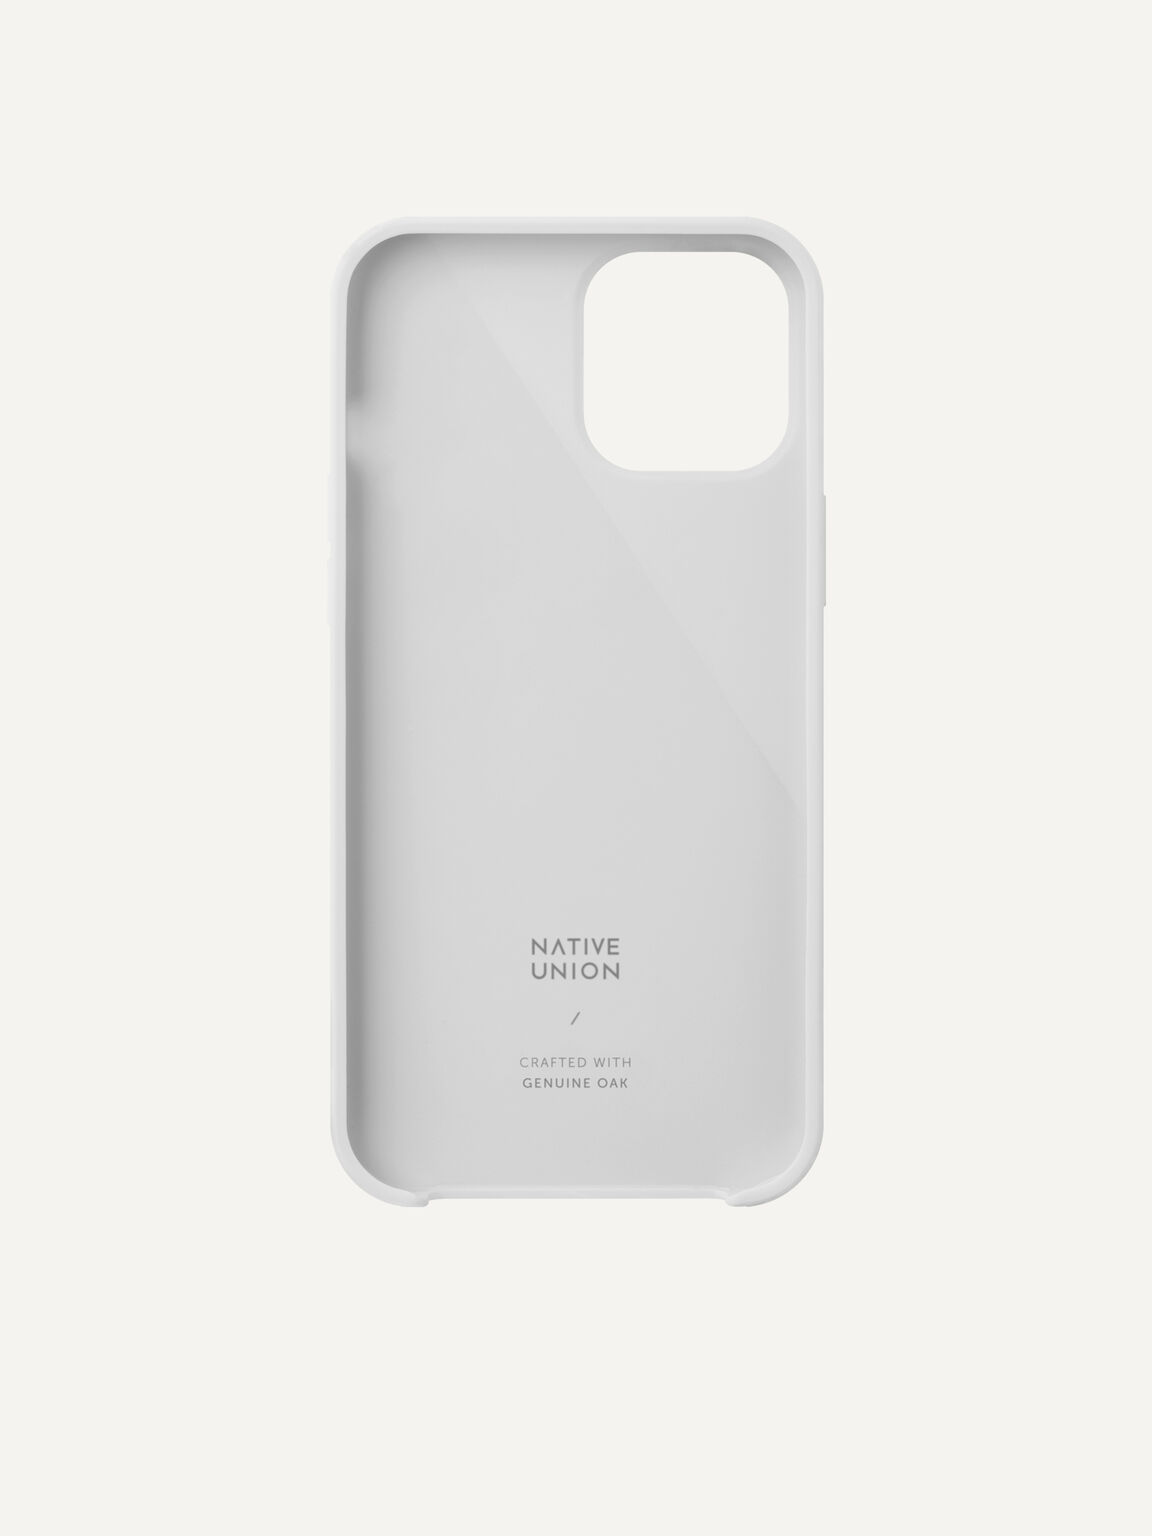 Genuine Wood iPhone 12 Max Pro Case, White